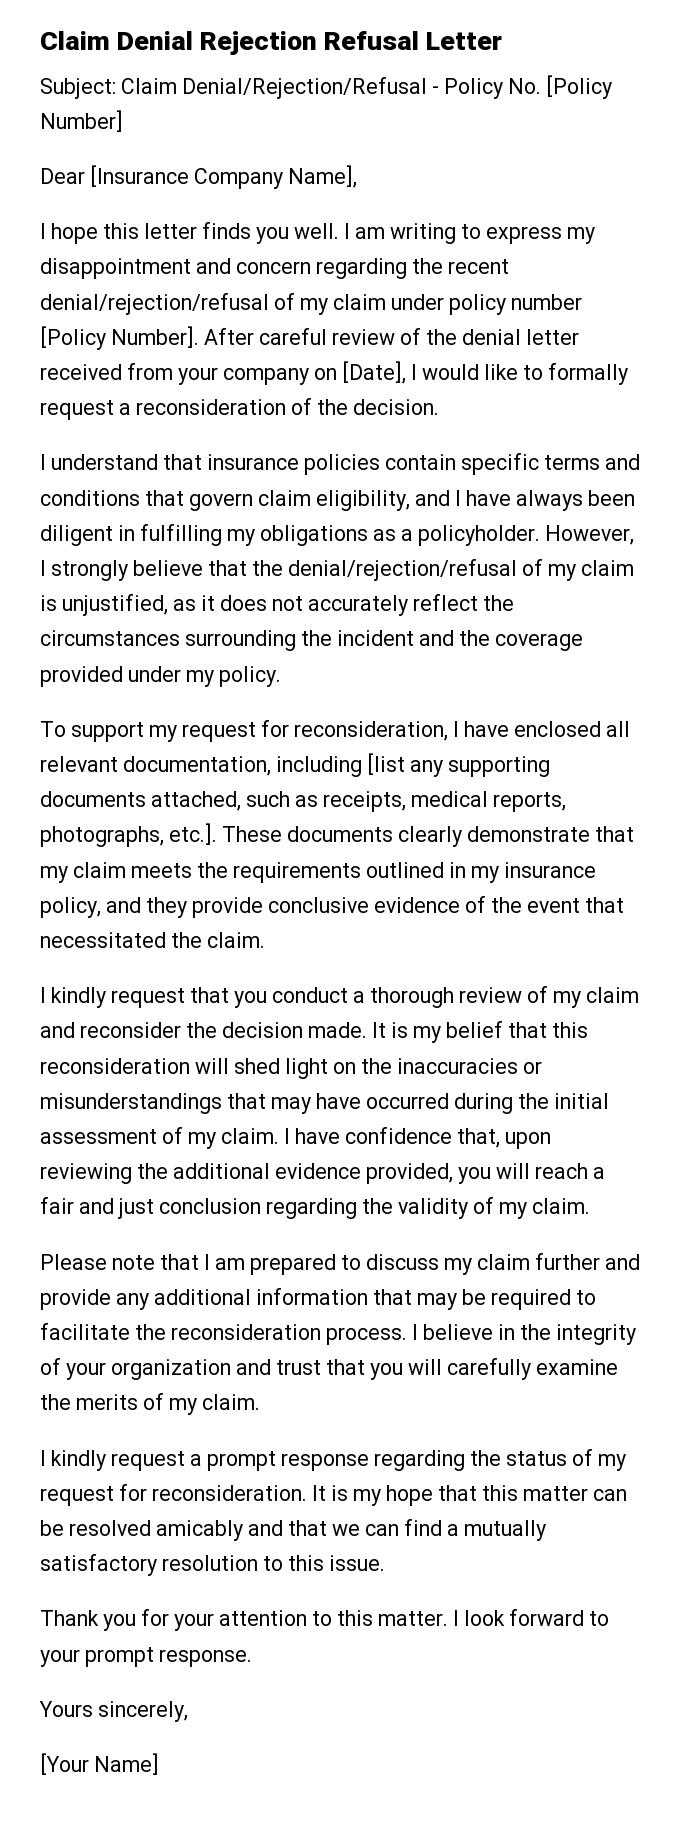 Claim Denial Rejection Refusal Letter